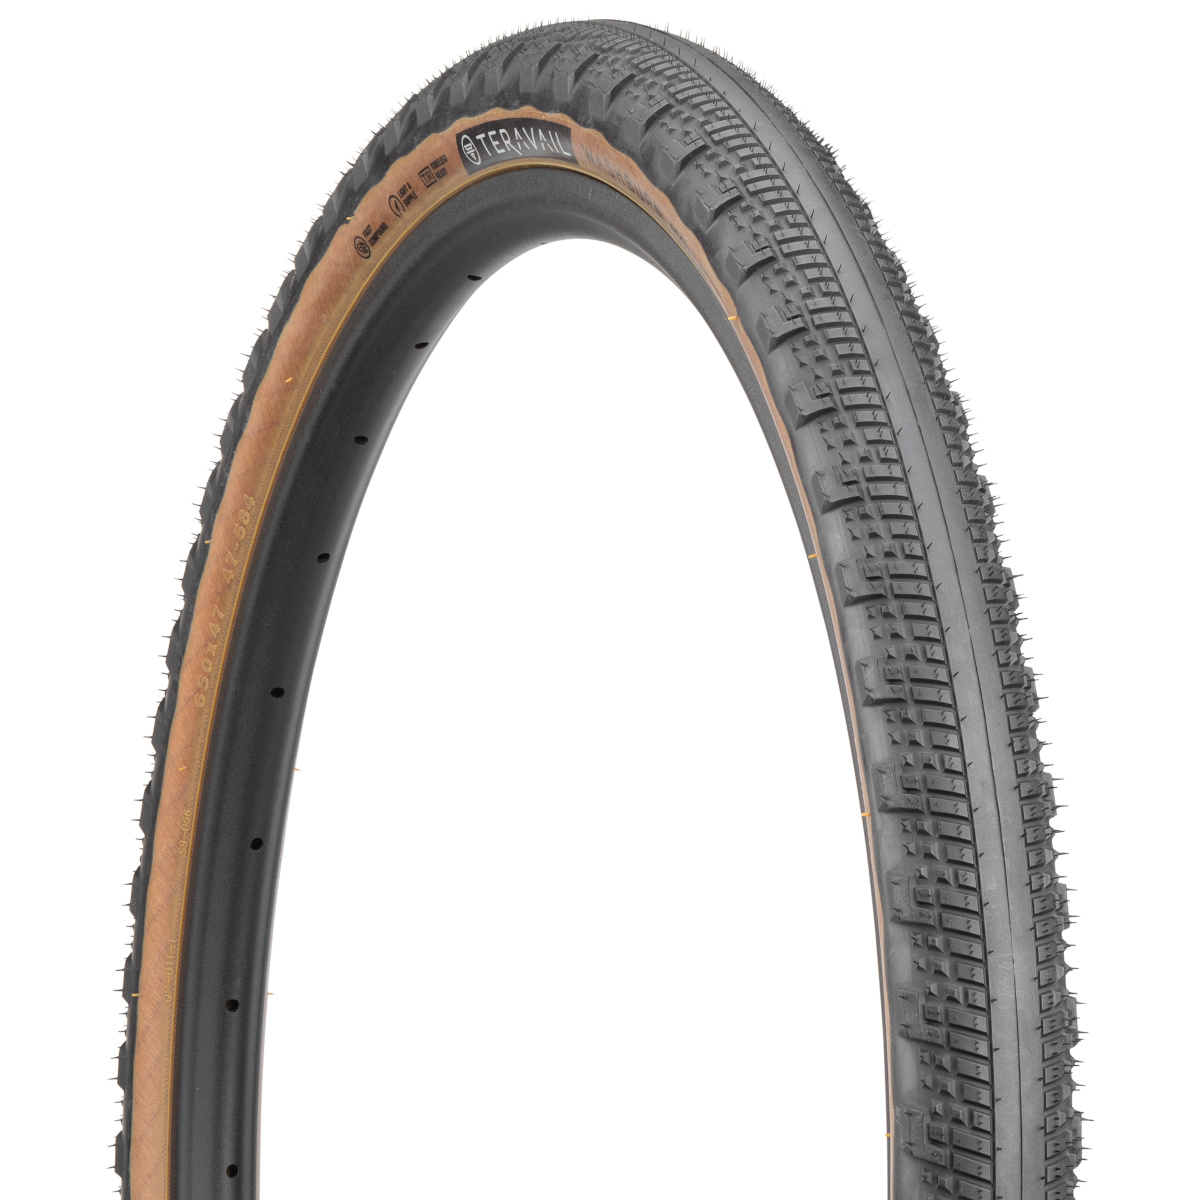 Productfoto van Teravail Washburn Folding Tire - Durable - 47-584 - black / tanwall